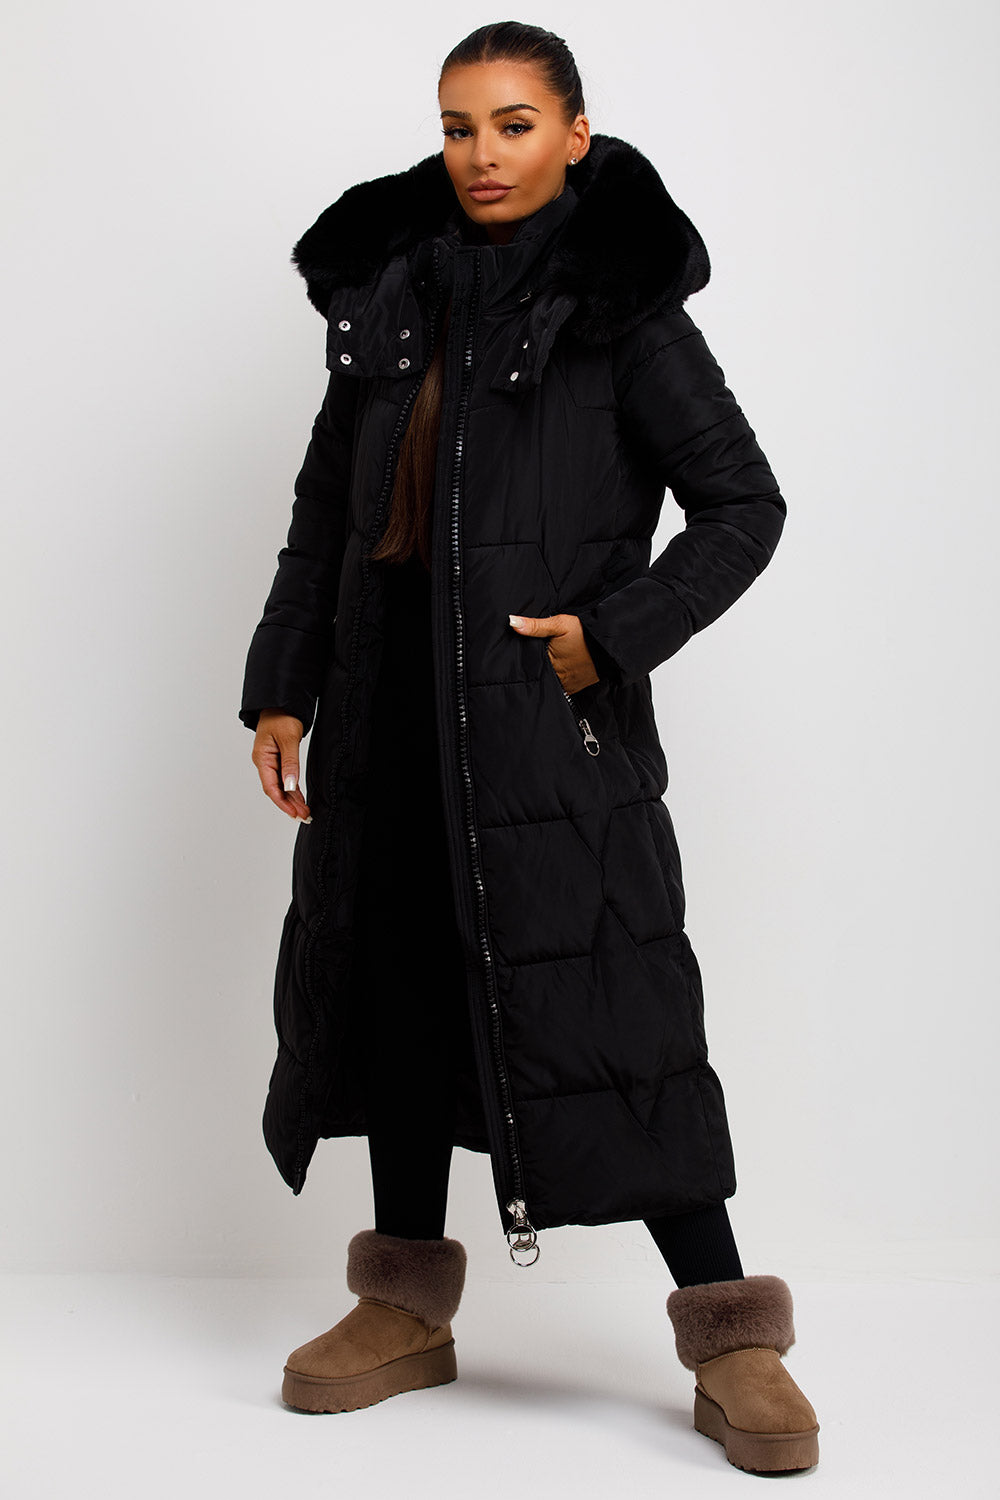 womens long puffer padded coat with fur hood